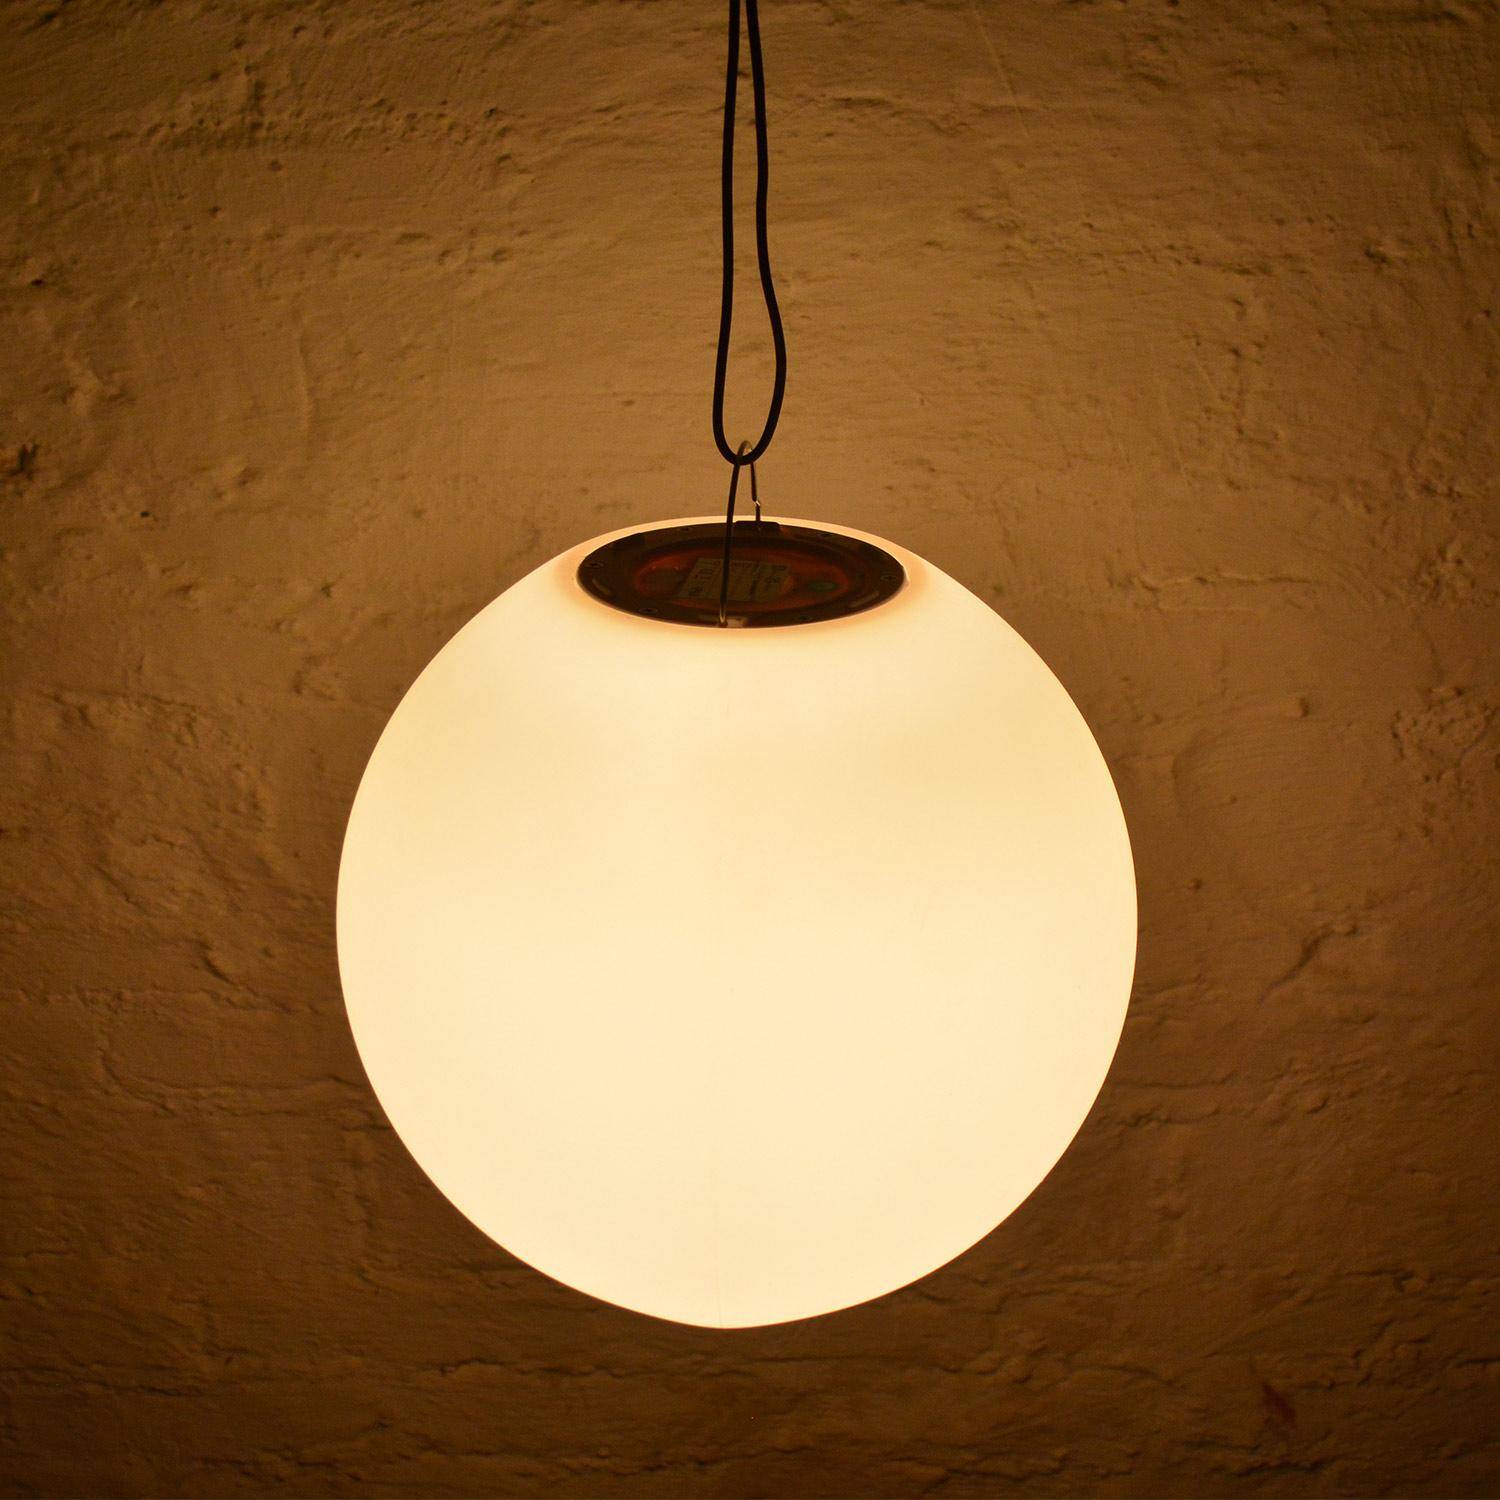 Bola LED 30cm - Esfera luminosa decorativa, Ø30cm, blanco cálido, mando a distancia Photo6